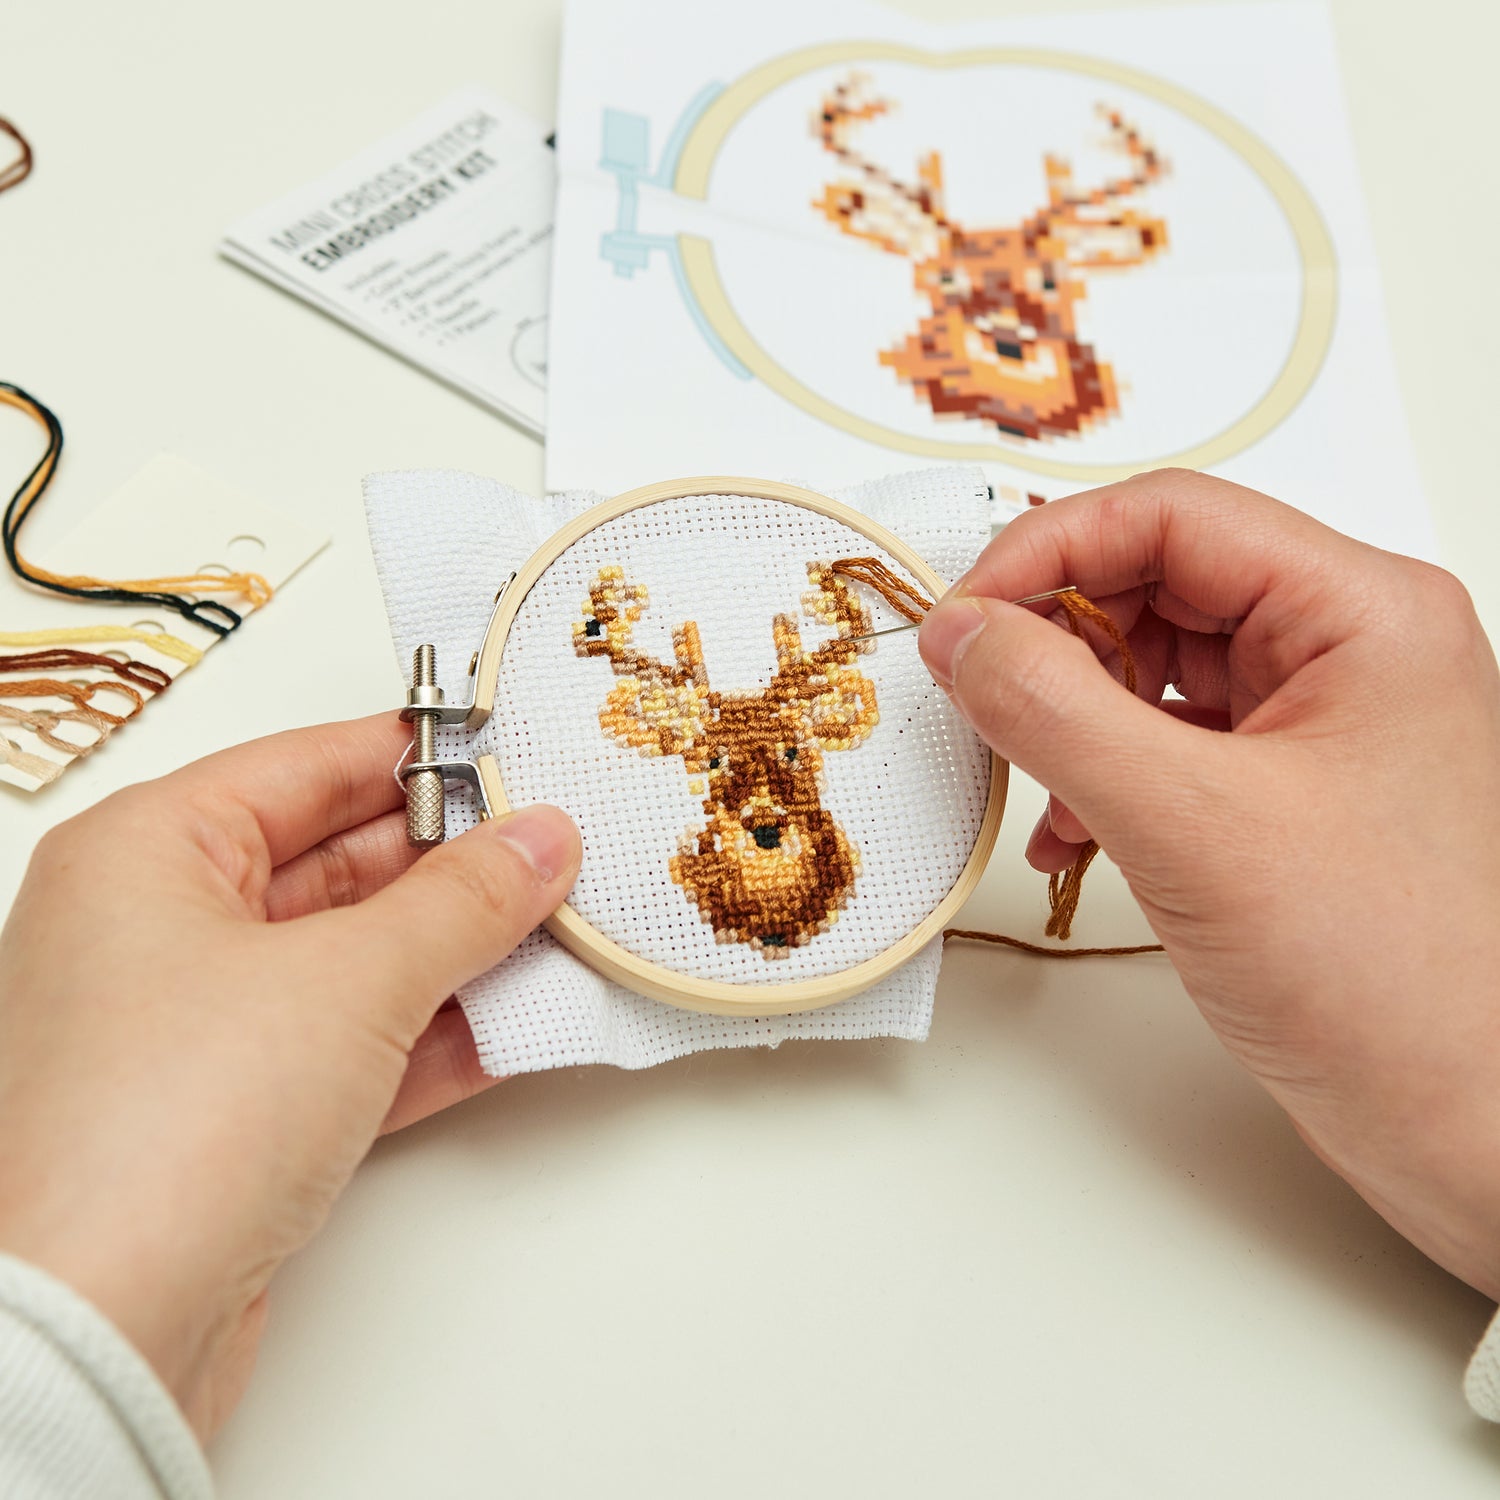 Mini Cross Stitch Embroidery Kit - Ladybug